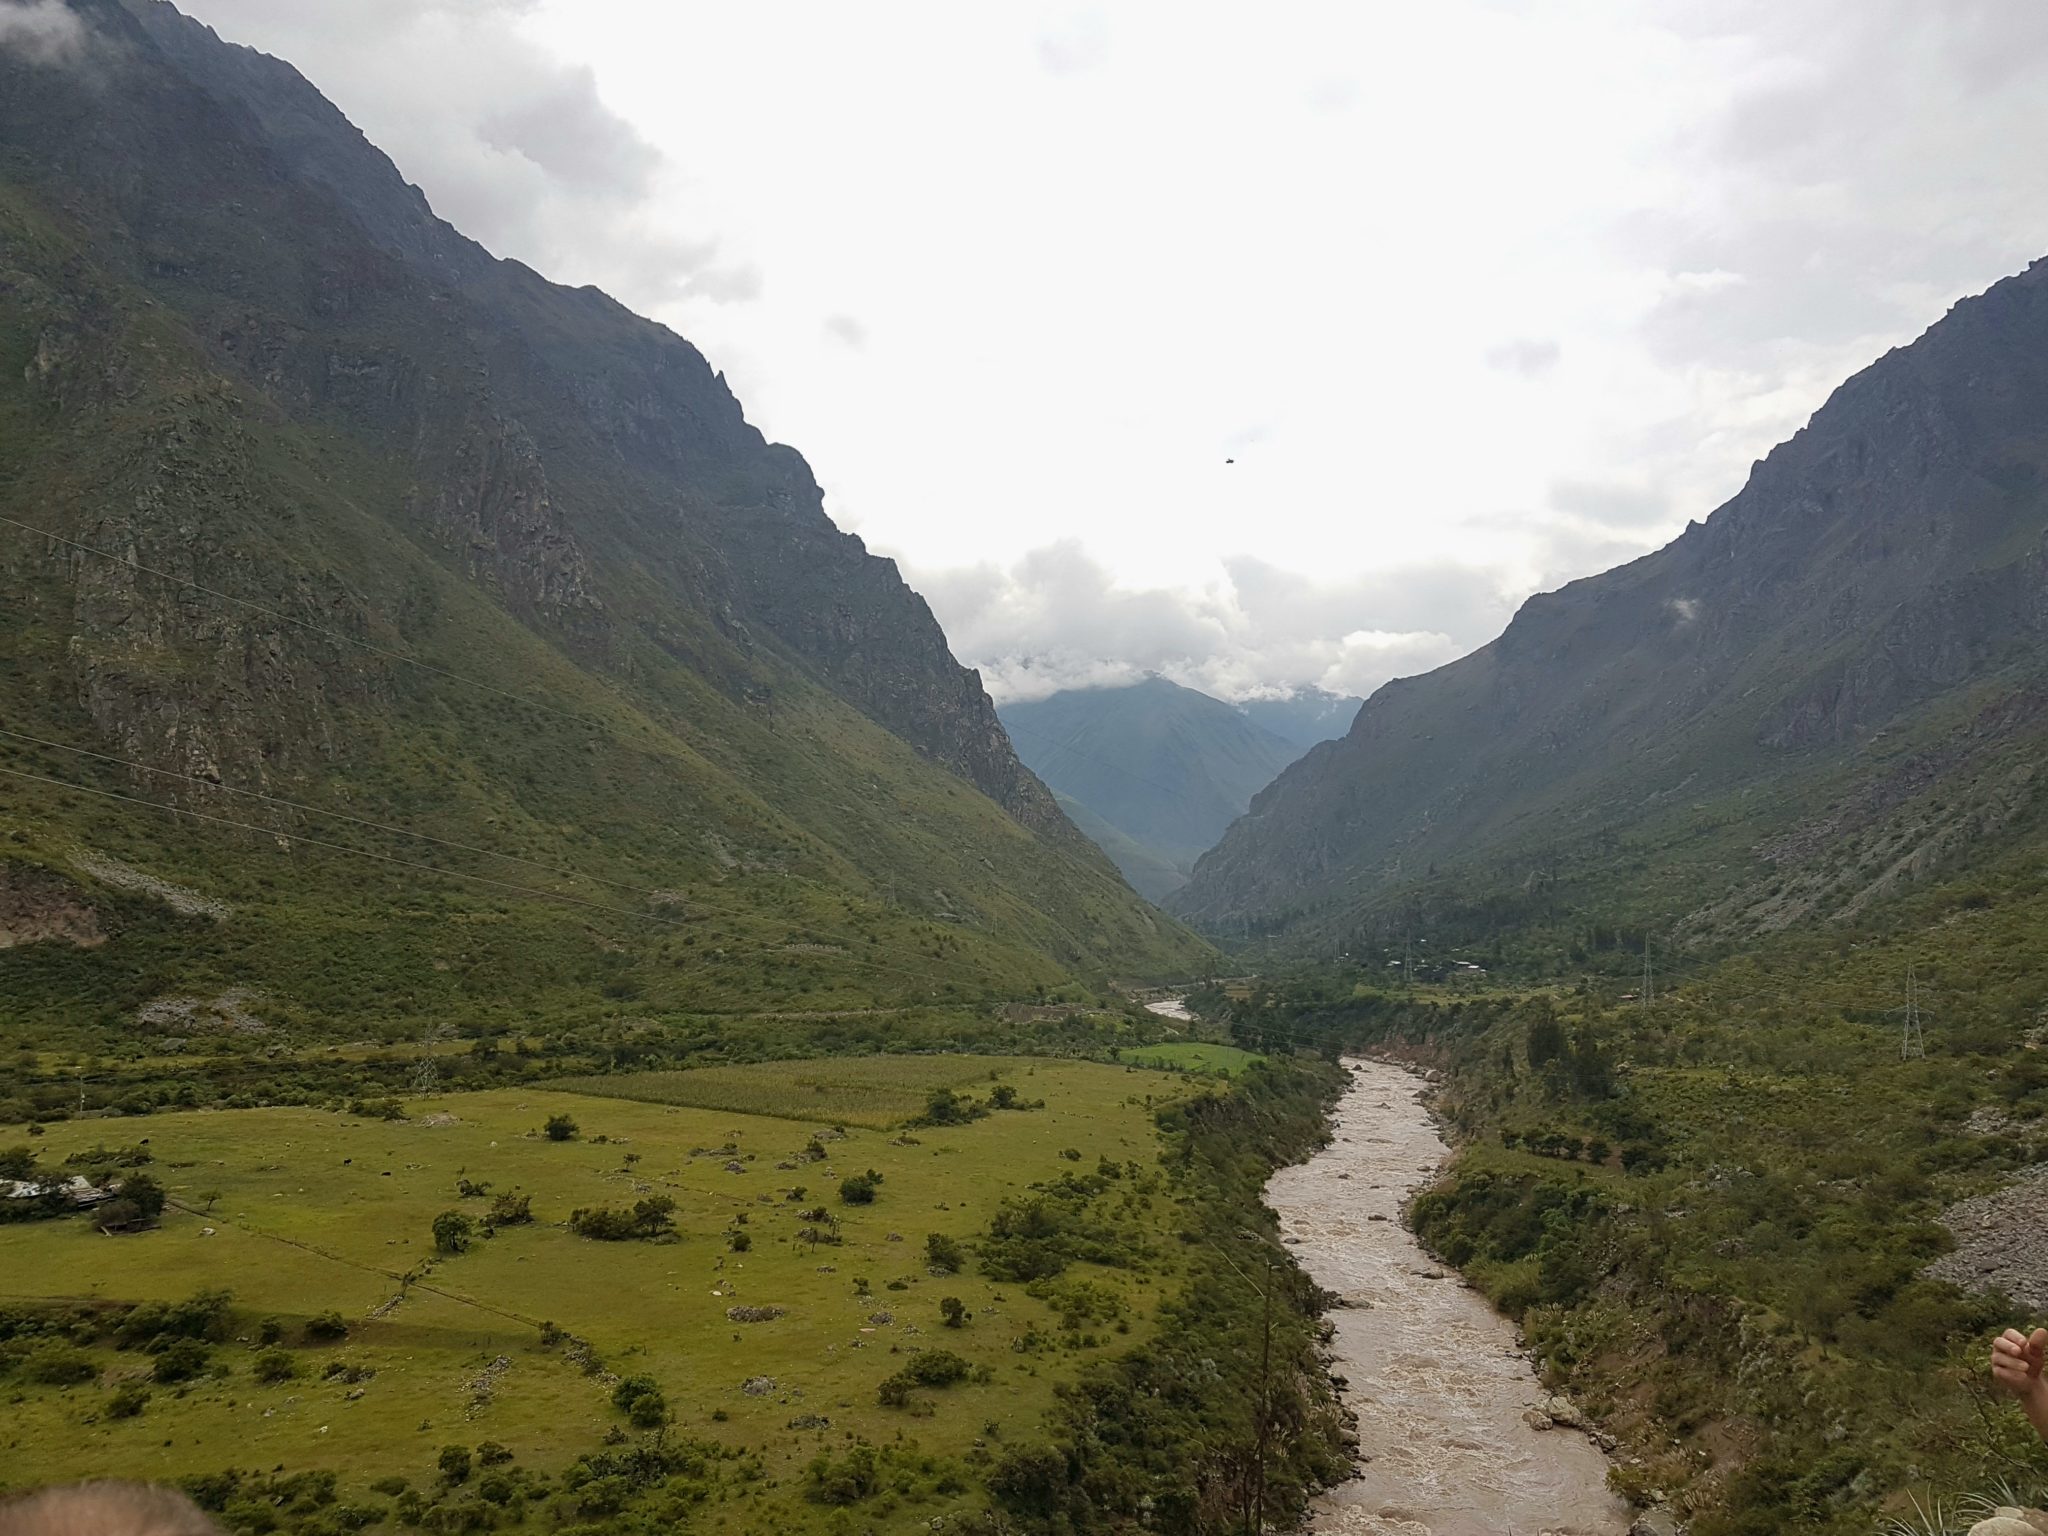 Machu Picchu Had Tons of Small Streams Running Down It